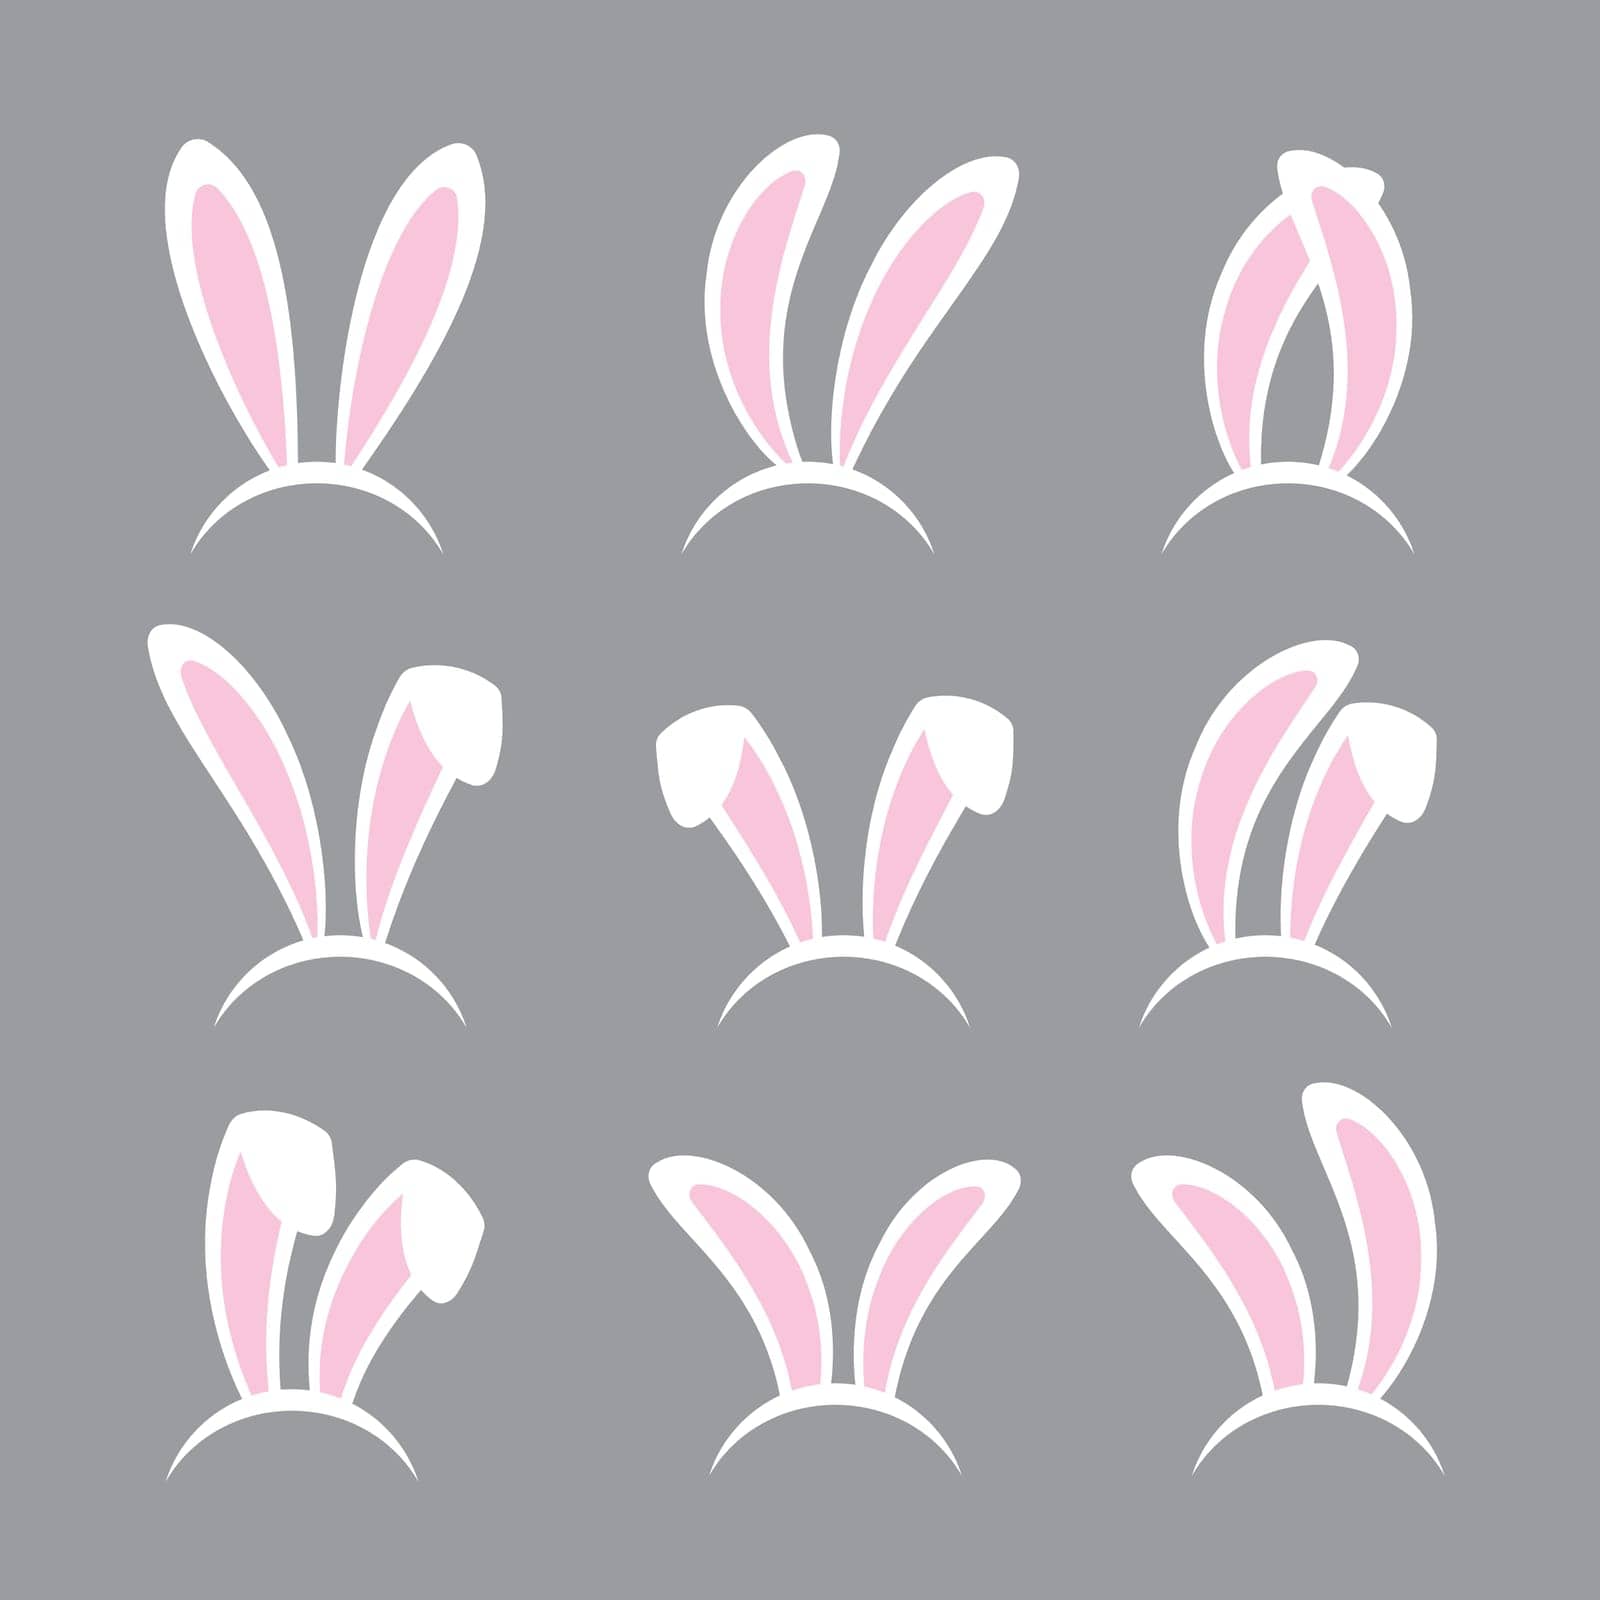 Rabbit ears headband set. Easter bunny ears isolated on background. by kaisorn